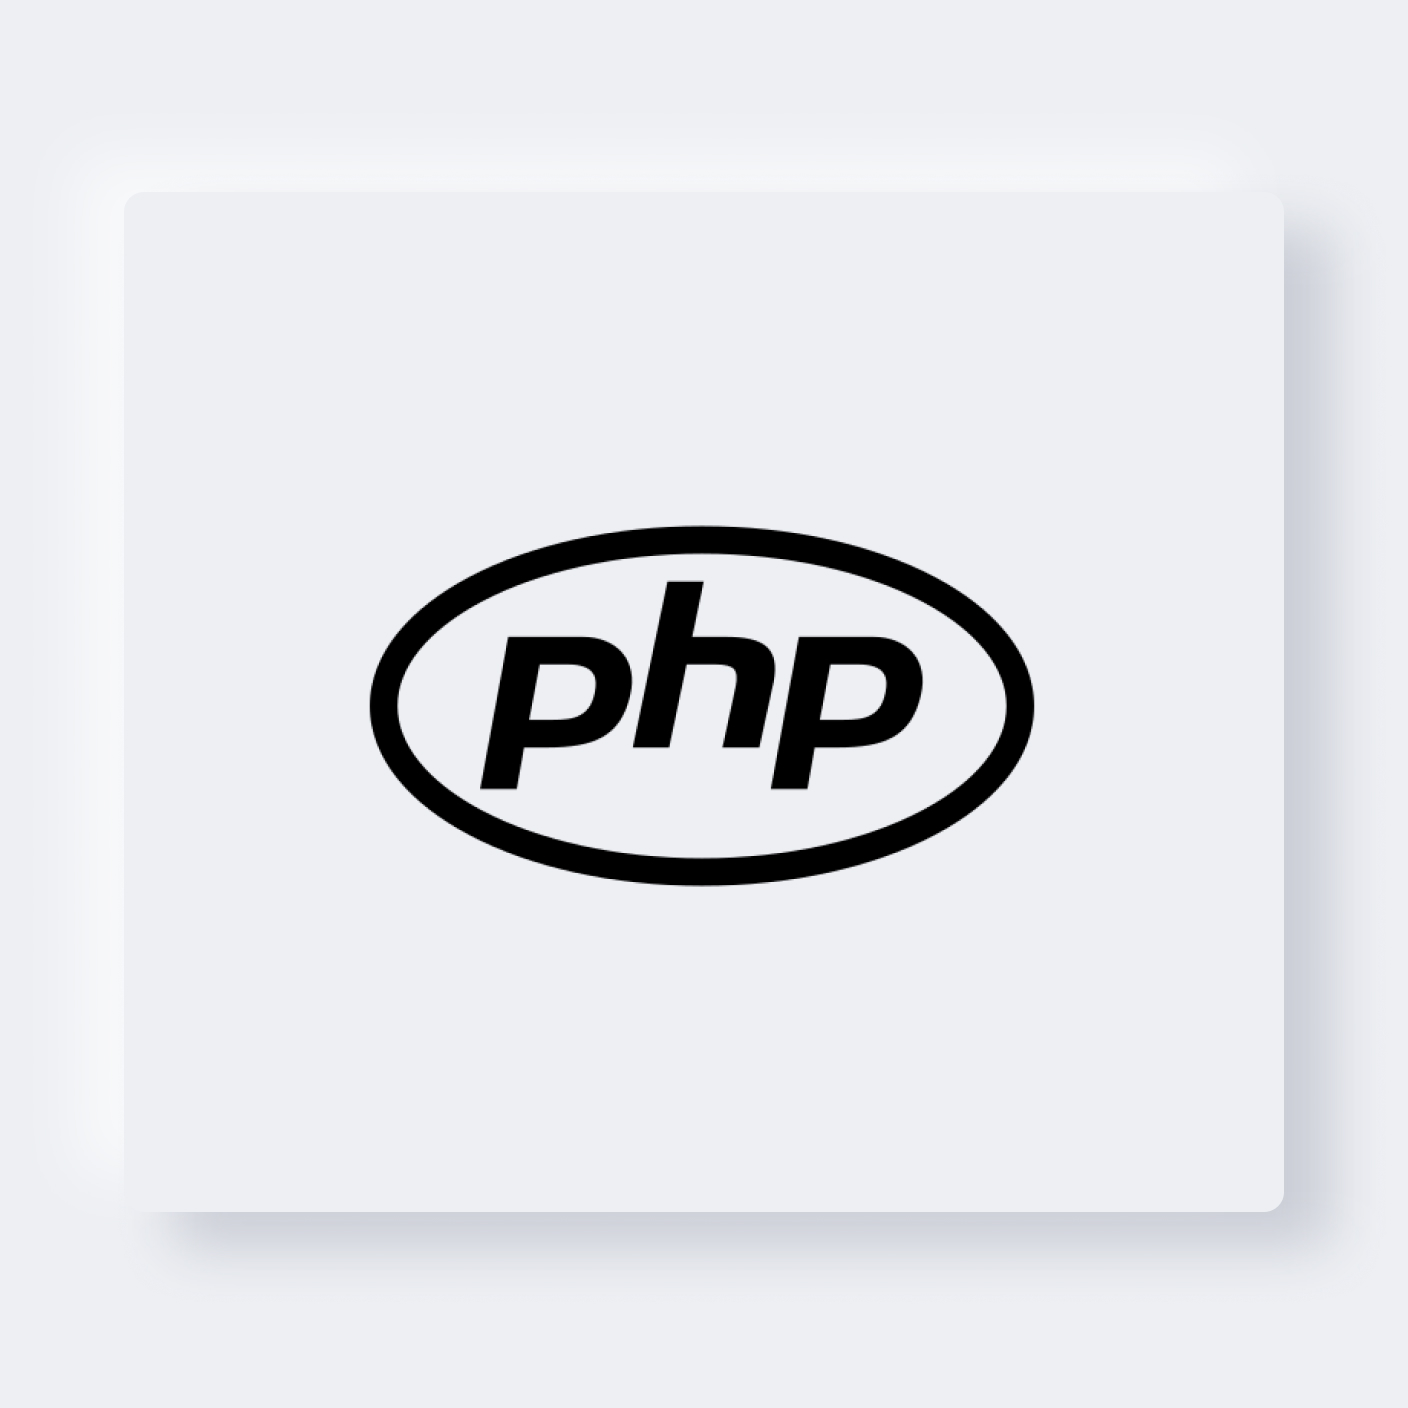 PHP - coding language